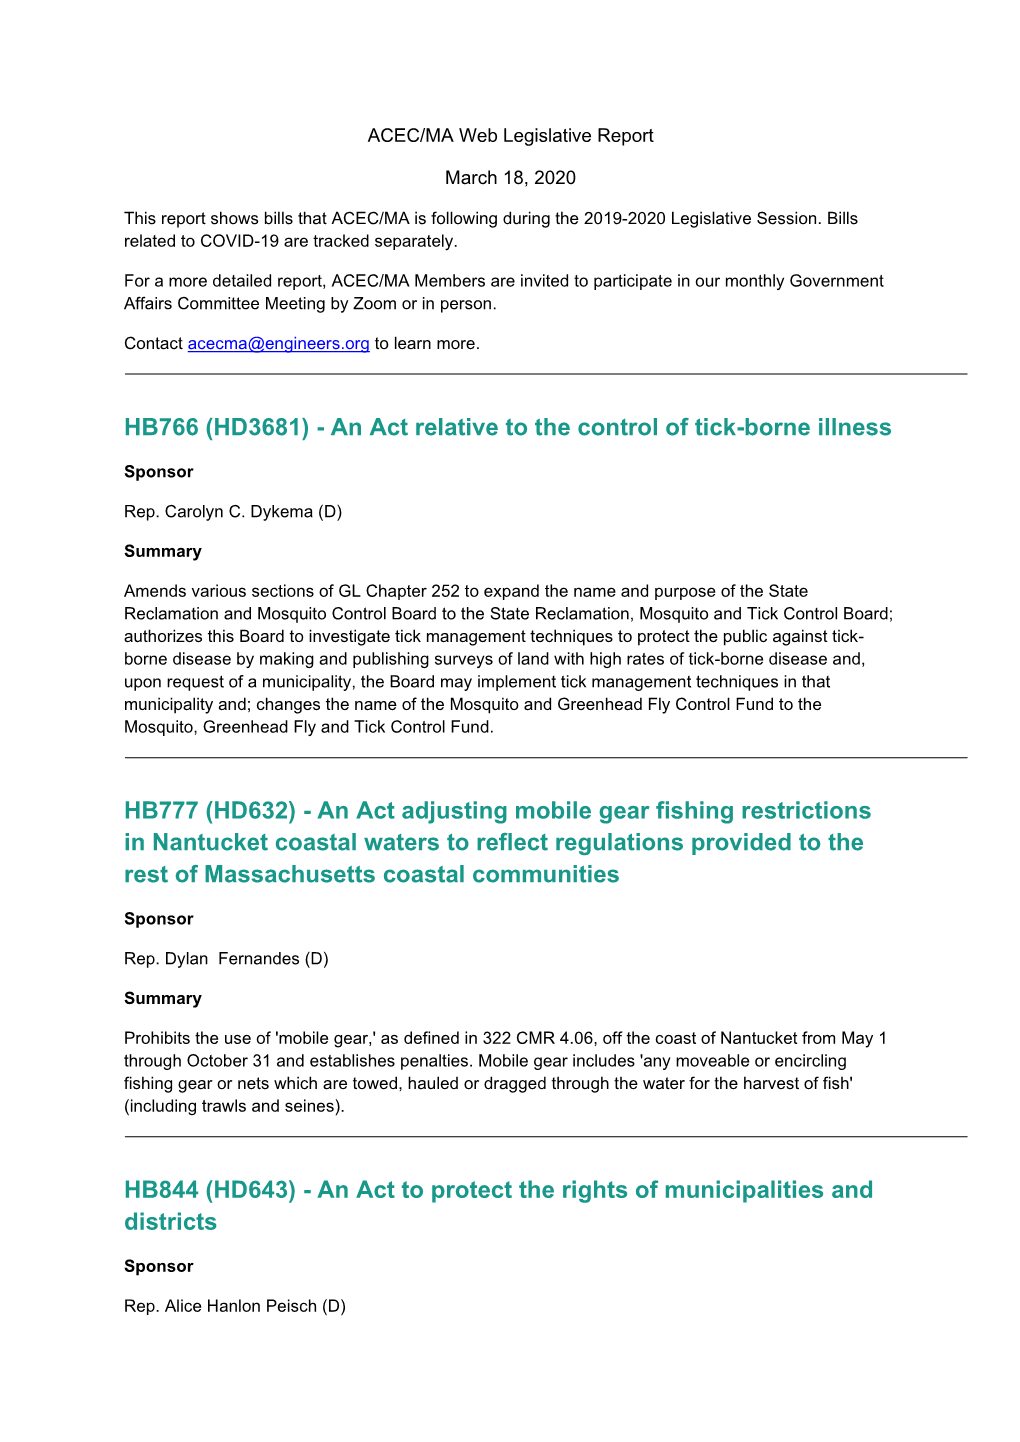 3-18-20 ACEC/MA Web Report on Legislation